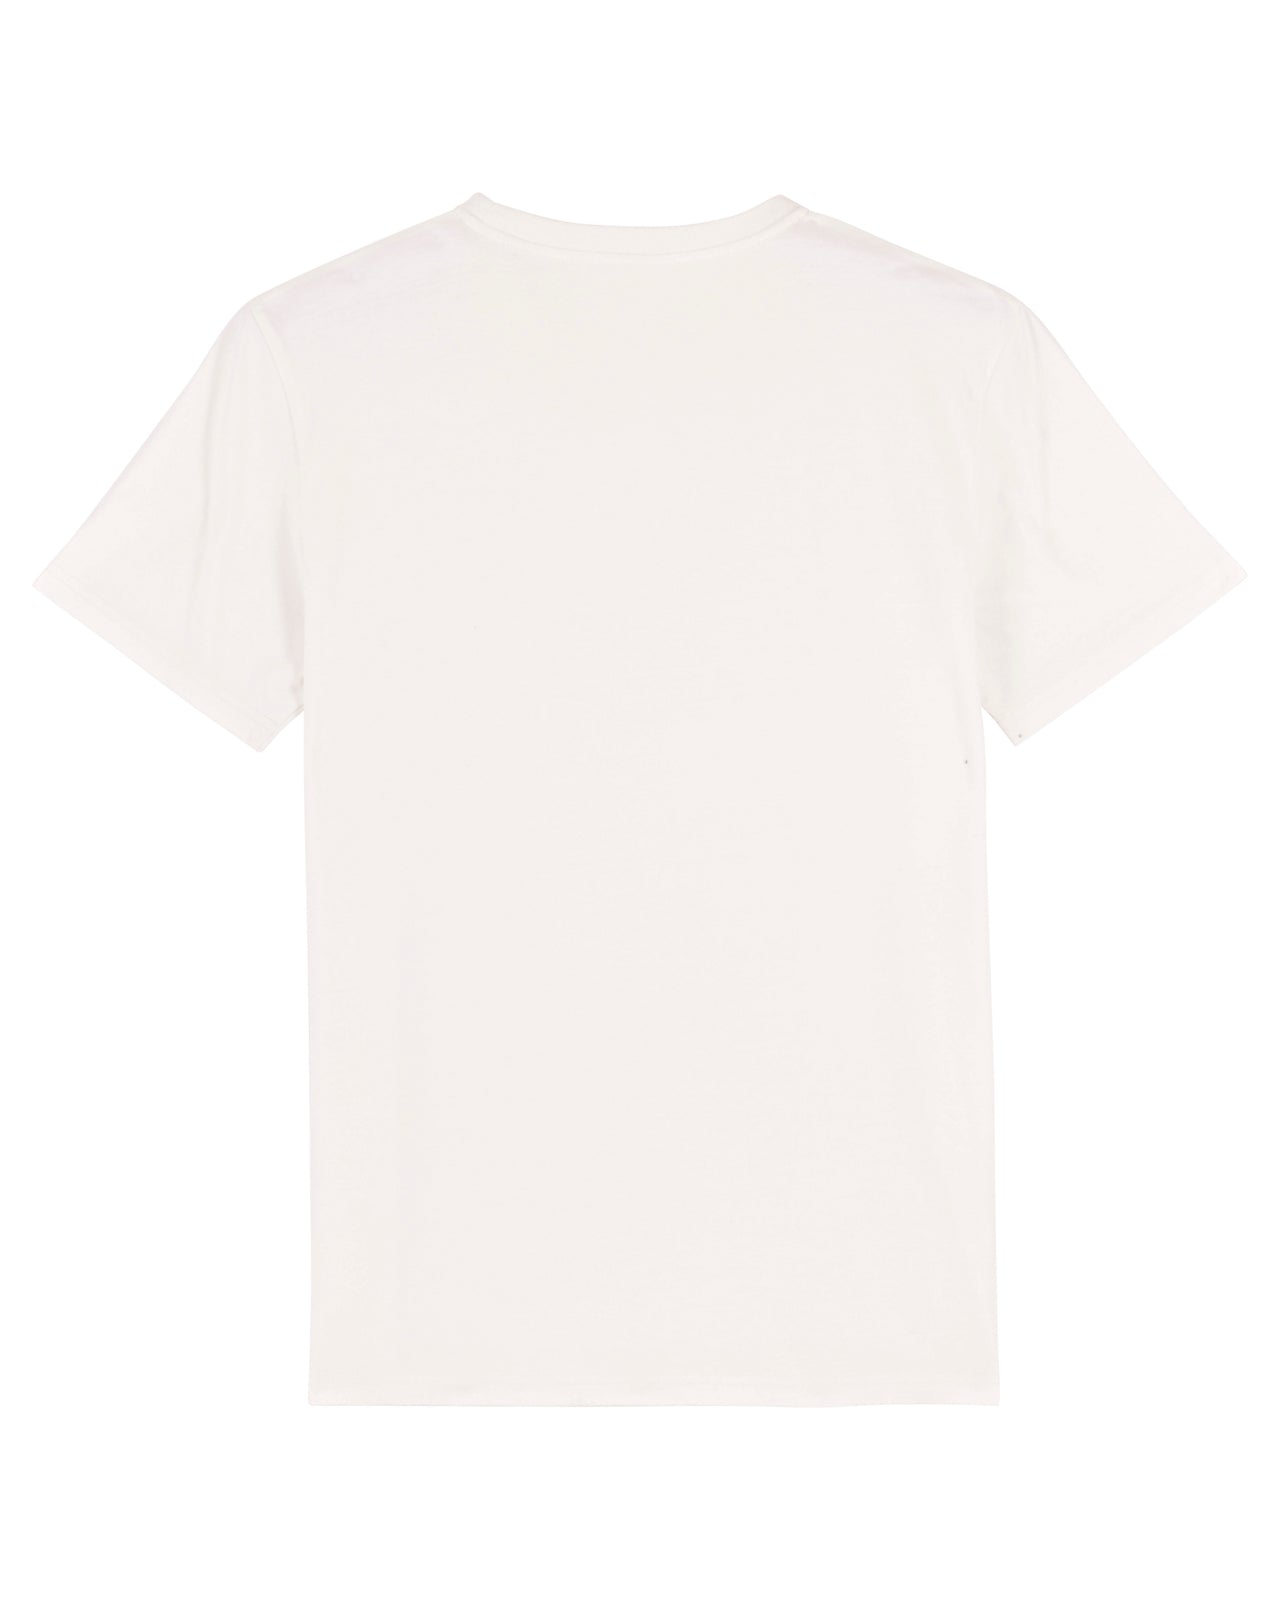 T-Shirt "Moin" Off White/Neonorange